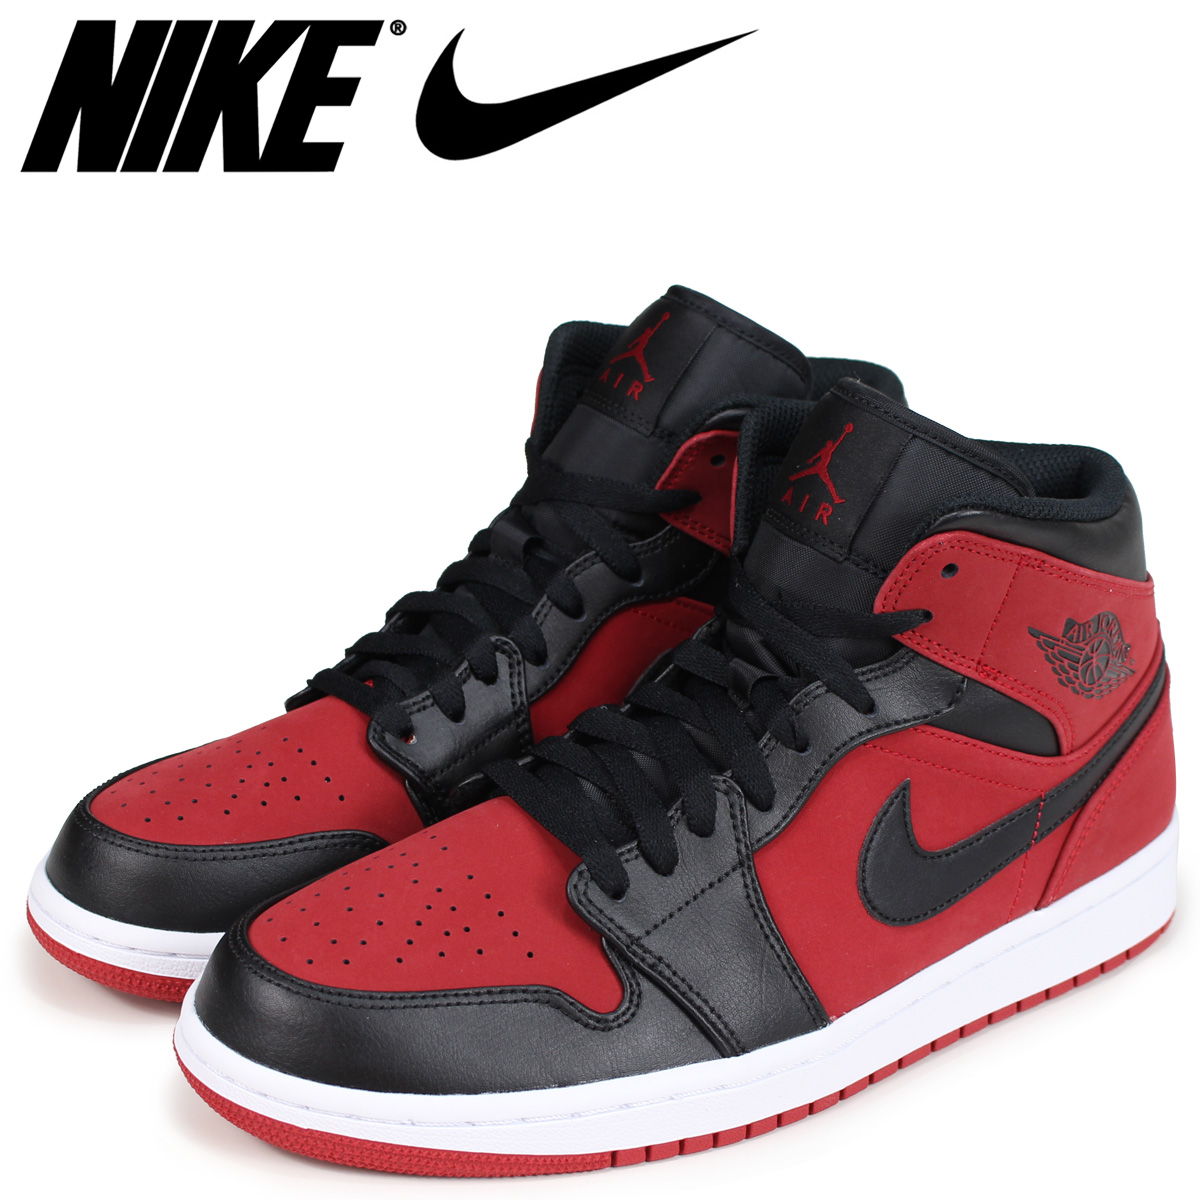 Найк джорданы оригинал цена. Nike Air Jordan 1 Mid se Red. Air Jordan 1 Mid GS. Nike Air Jordan 1 Mid Black Red. Nike Jordan Air Jordan 1 Mid.